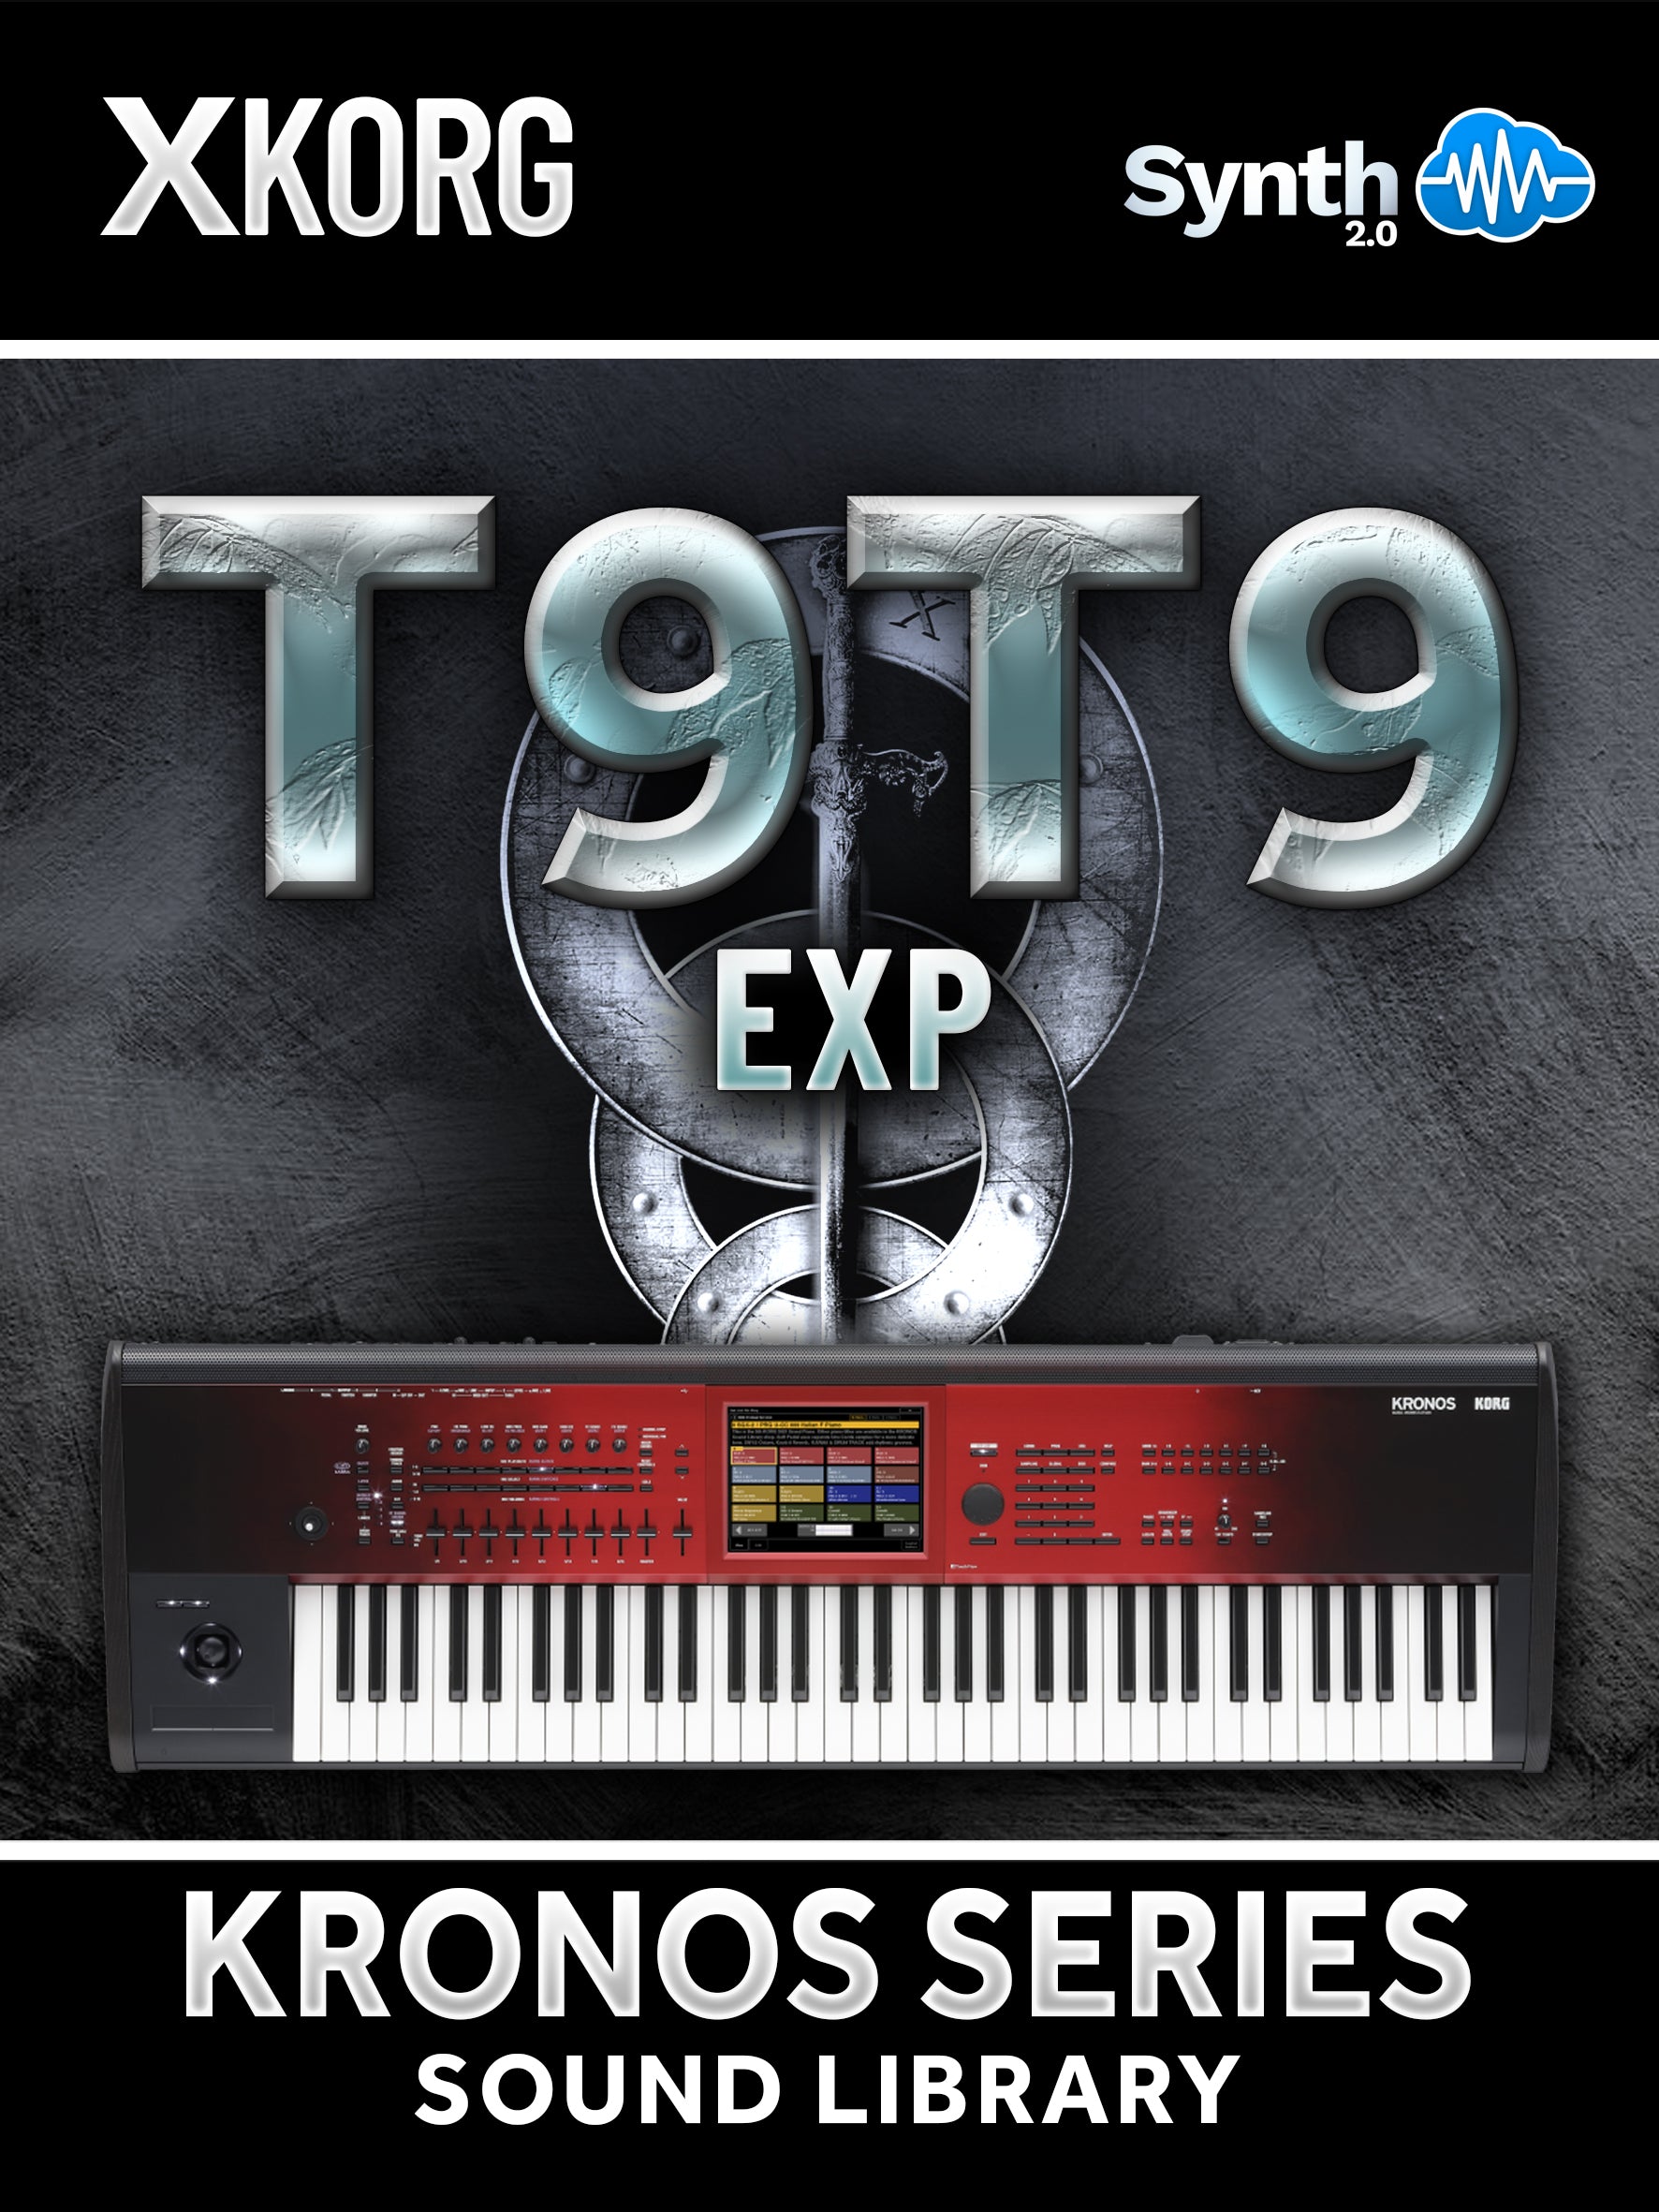 FPL007 - ( Bundle ) - PF Cover EXP + T9T9 Cover EXP - Korg Kronos Series